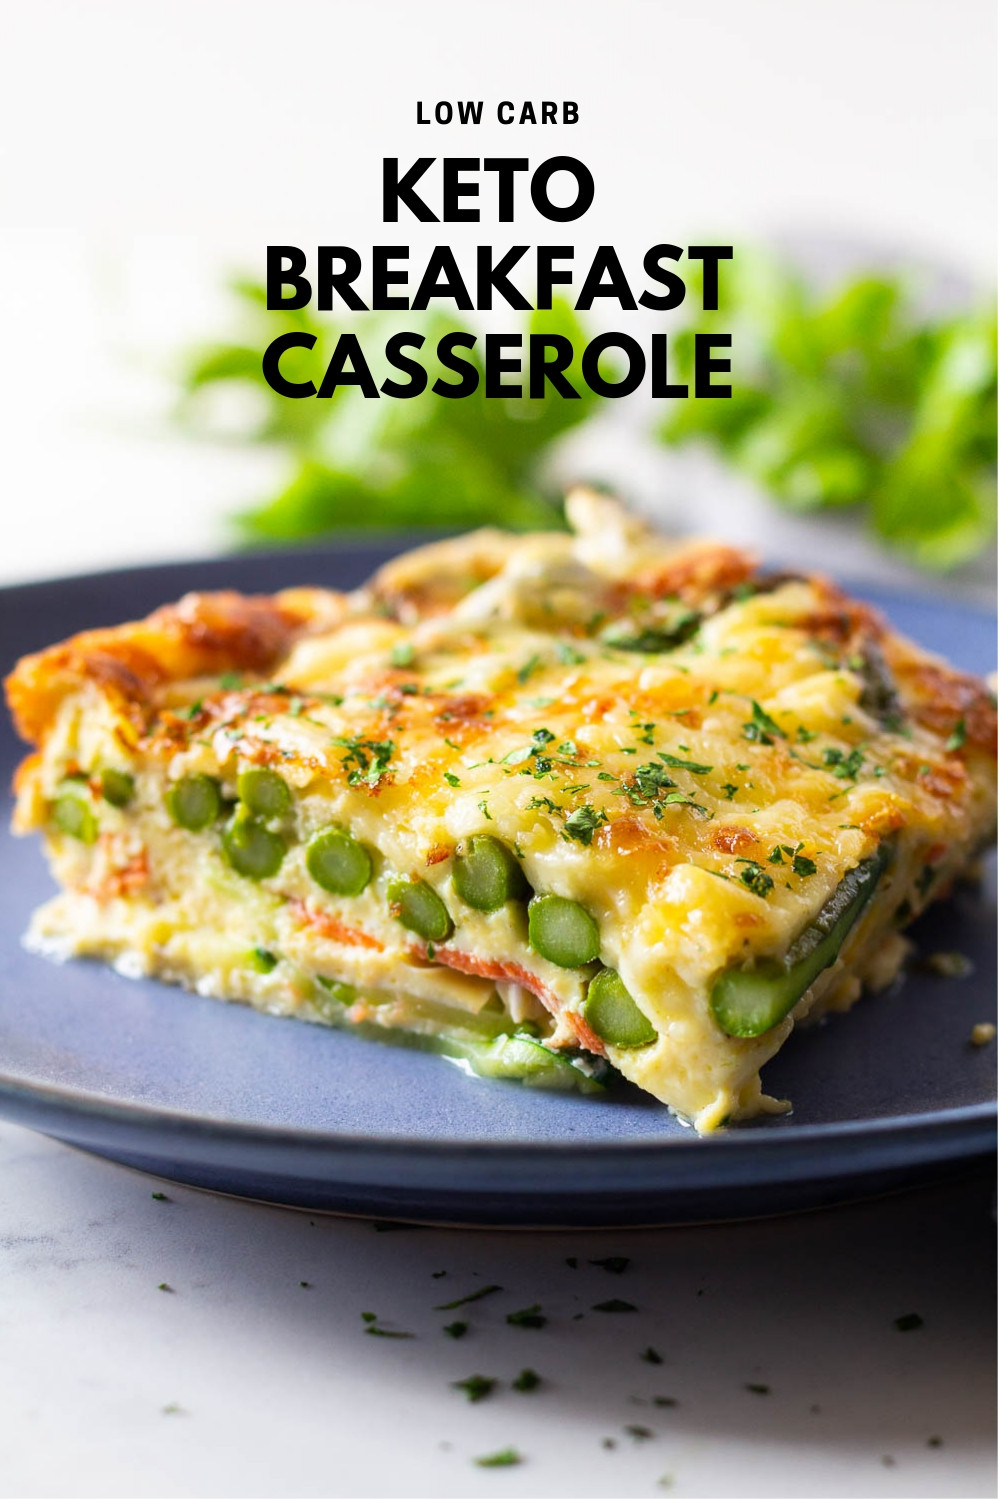 Low Carb Keto Recipes Breakfast
 Easy Keto Breakfast Casserole Green Healthy Cooking